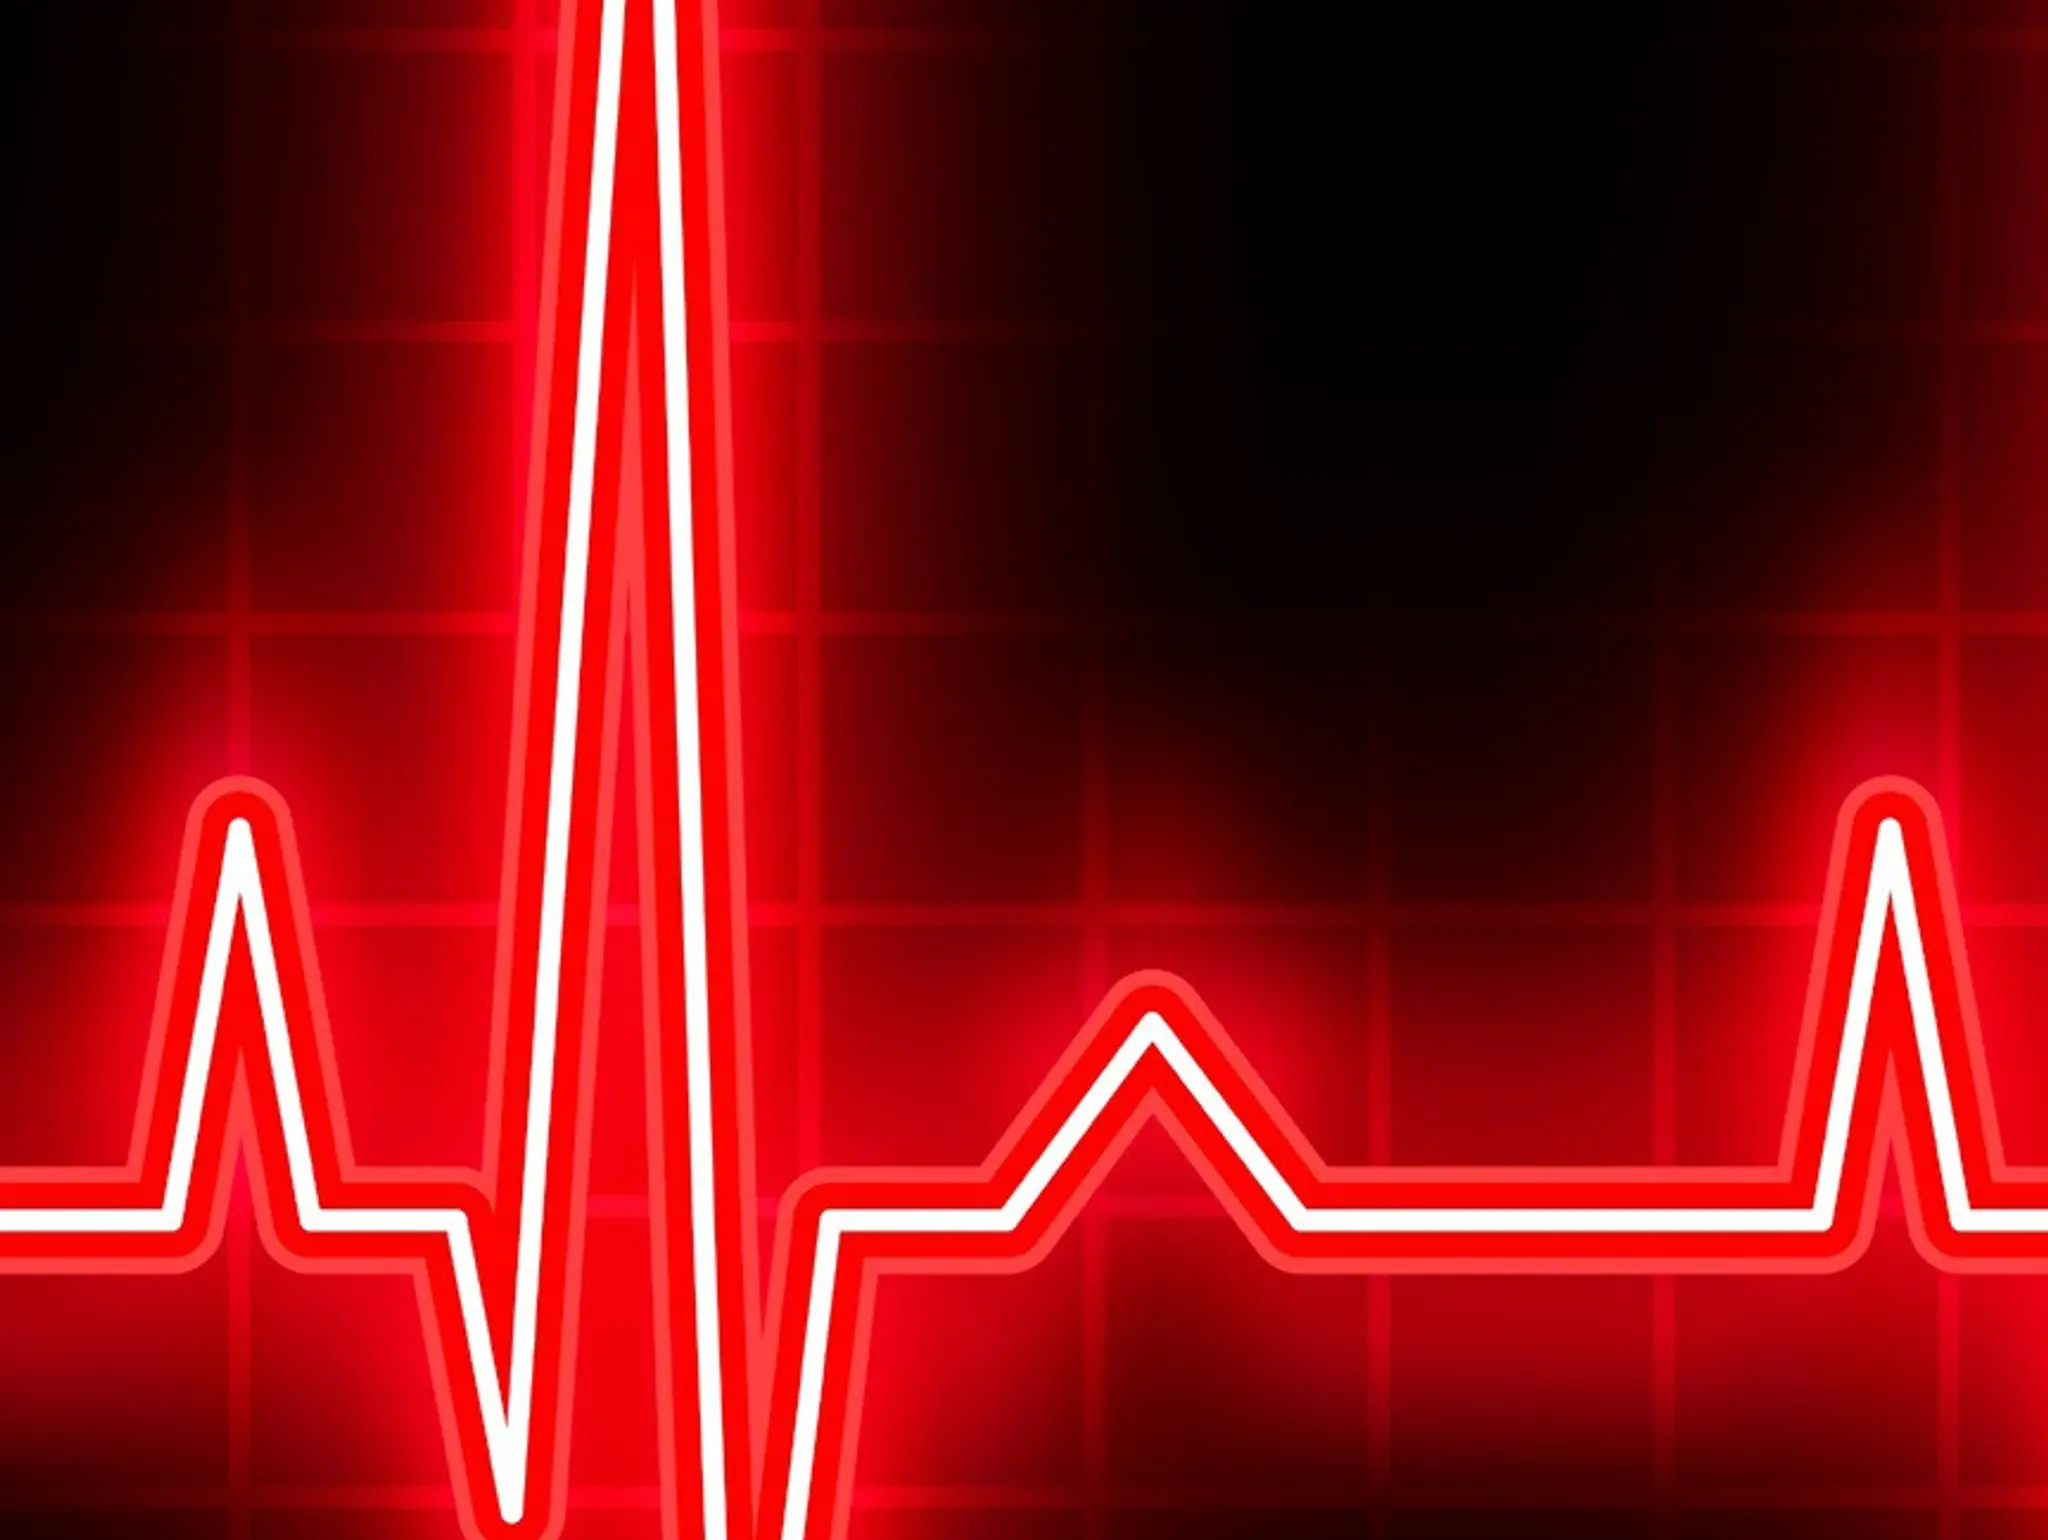 FDA approves Abbott’s Assert-IQ insertable cardiac monitor